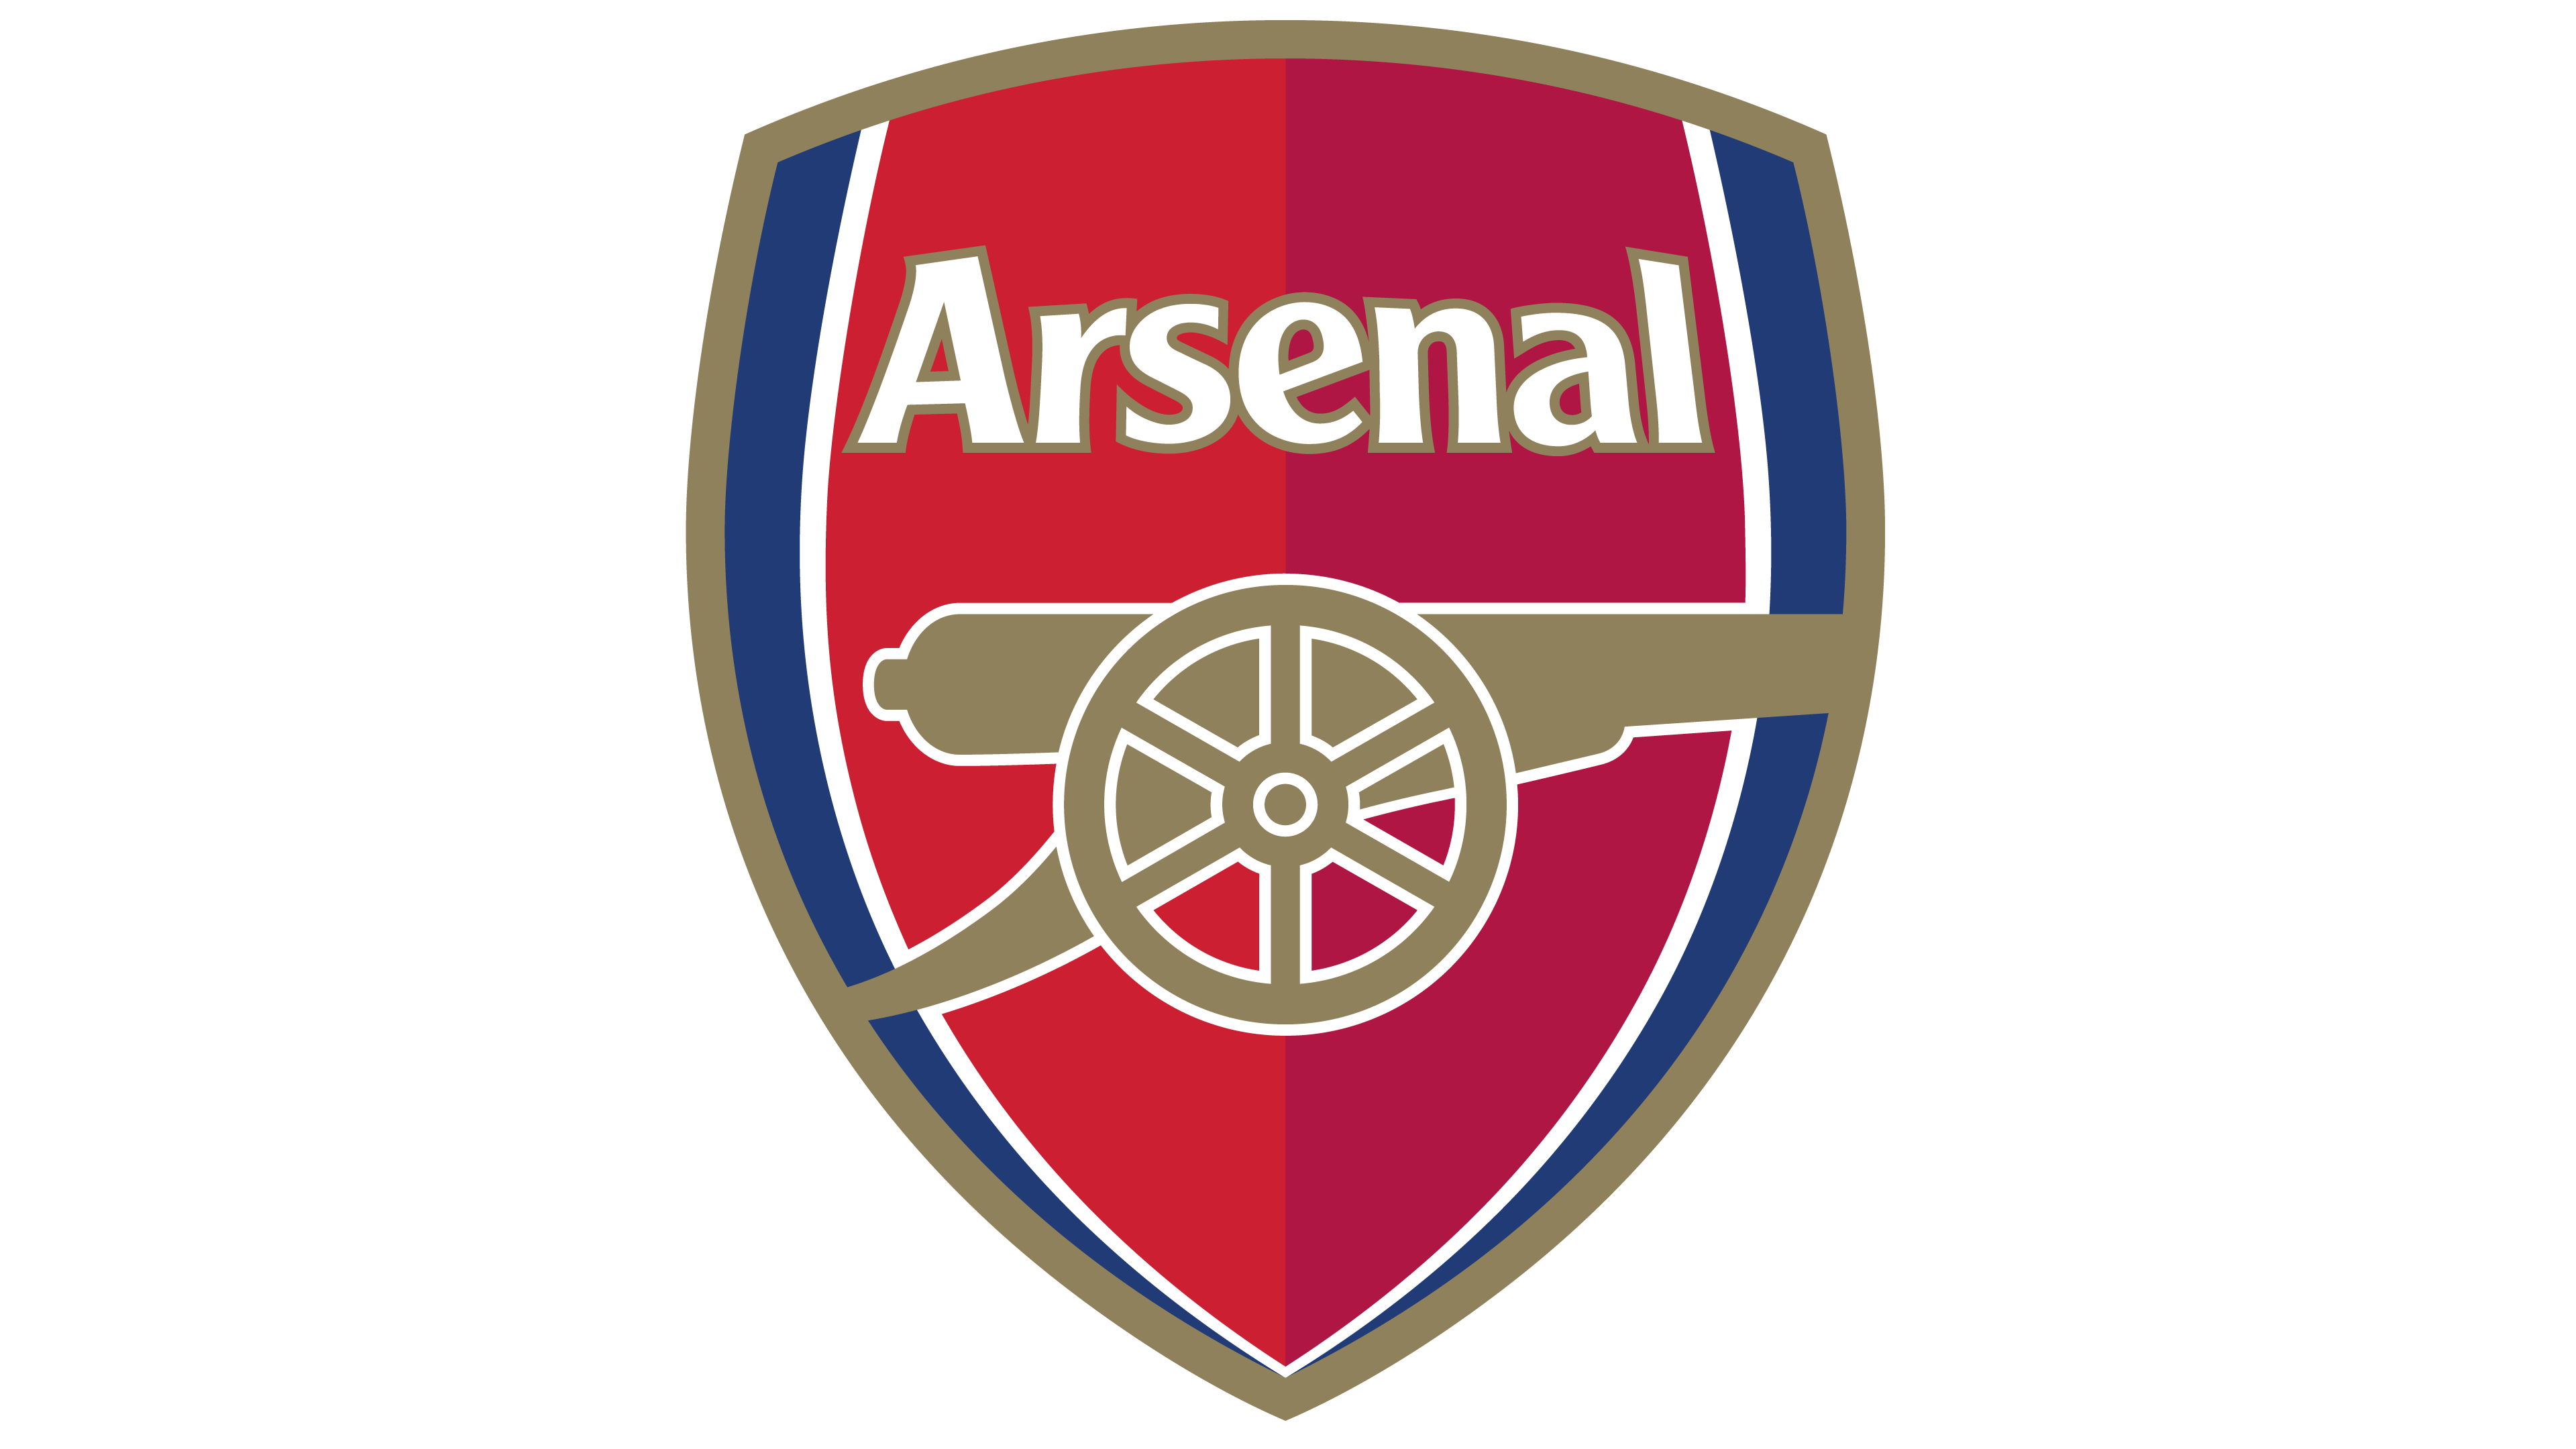 Arsenal Logo - Arsenal logo - Interesting History of the Team Name and emblem